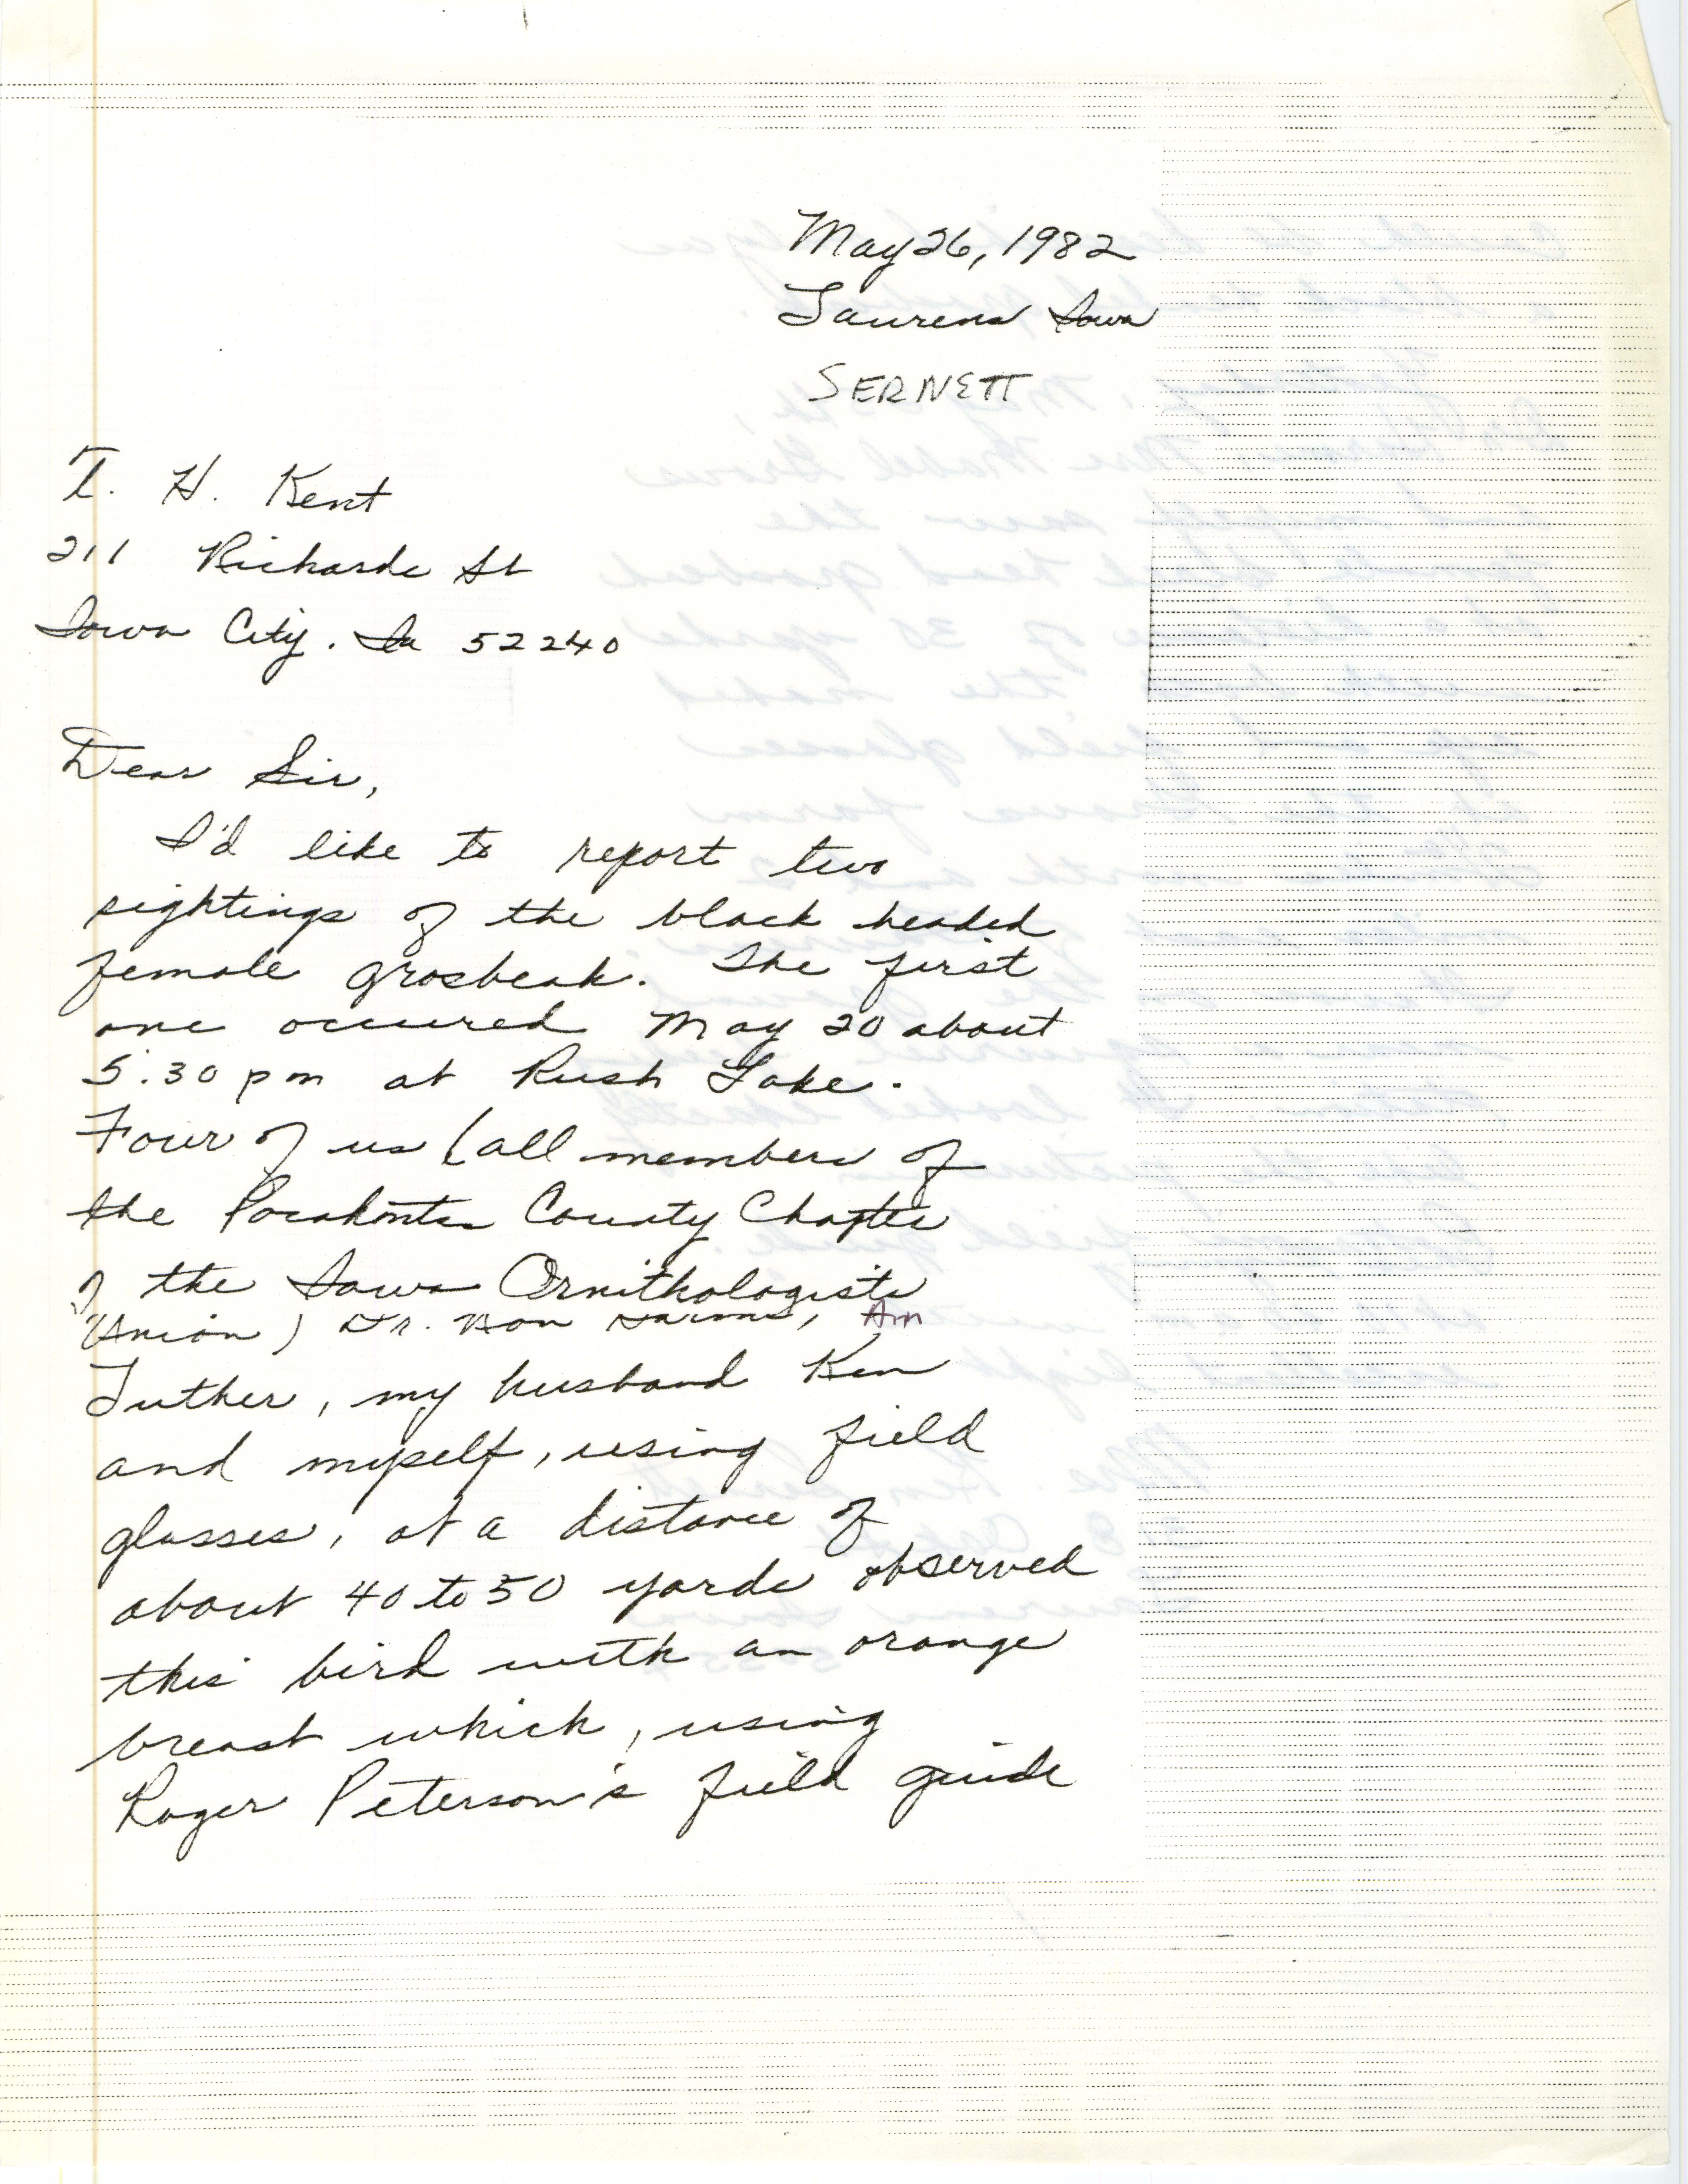 Ann Mccartan Sernett letter to Thomas H. Kent regarding field notes, May 26, 1982